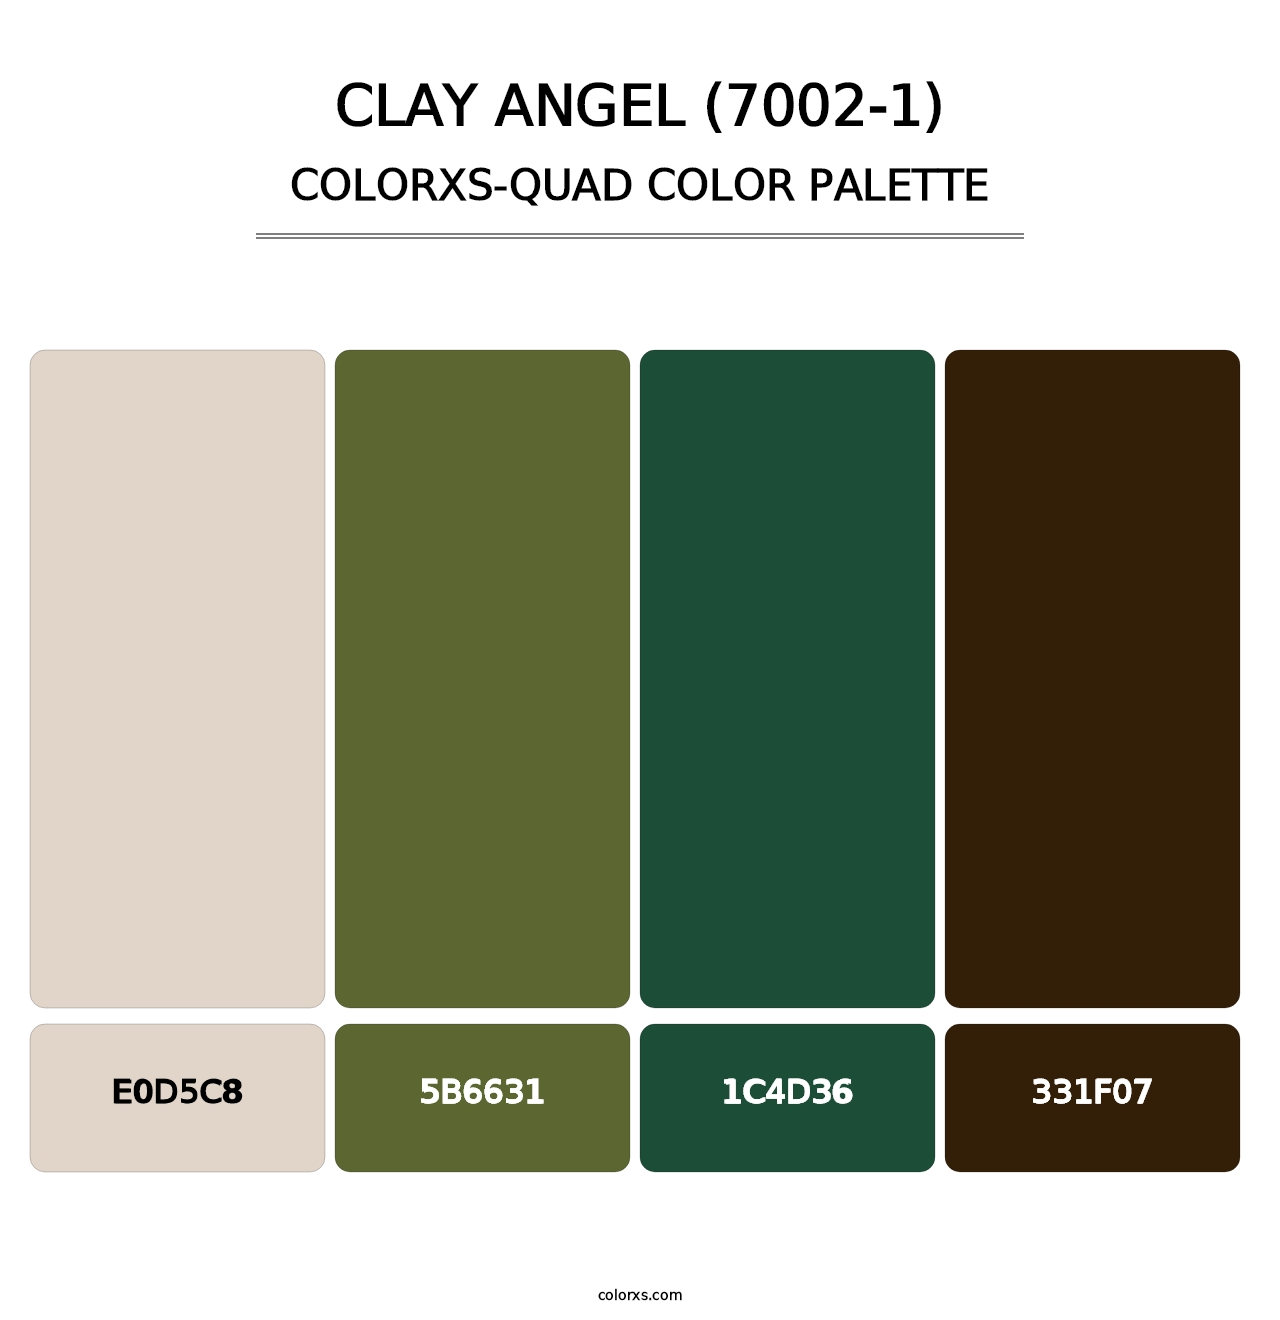 Clay Angel (7002-1) - Colorxs Quad Palette